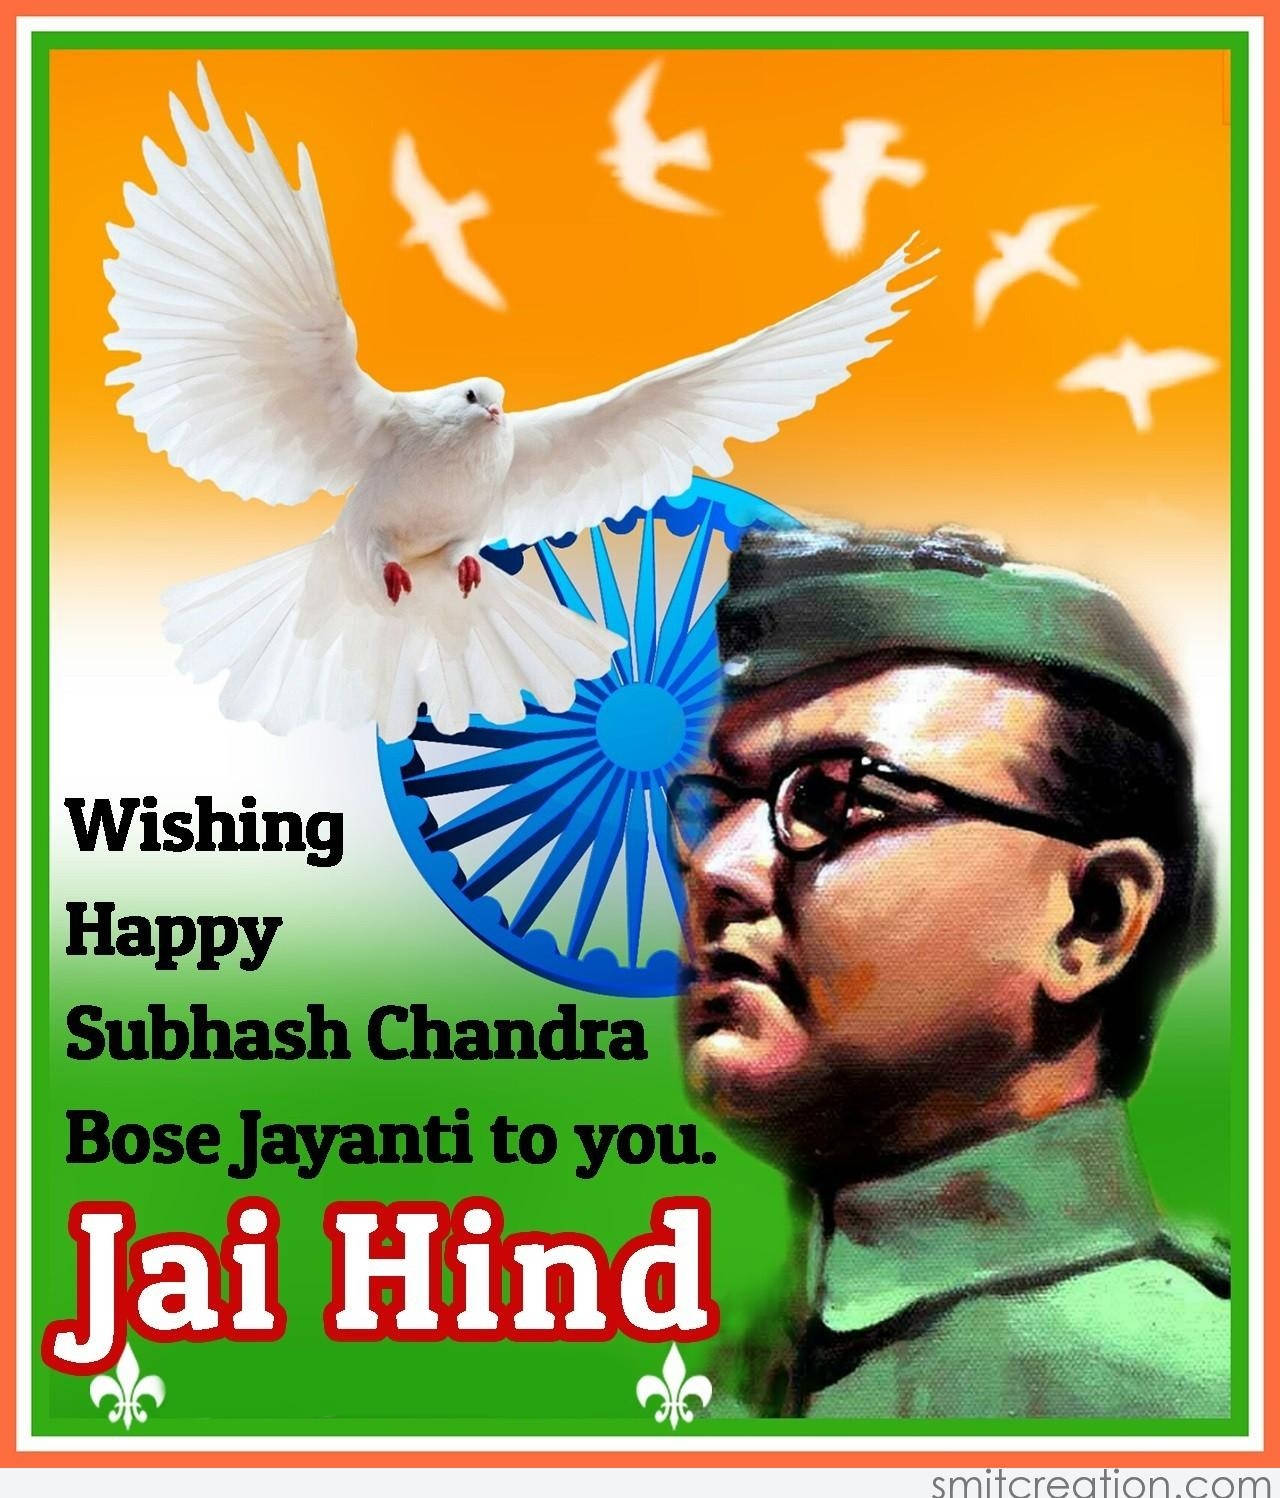 Download Jai Hind Celebration With Netaji Bose Image Wallpaper | Wallpapers .com